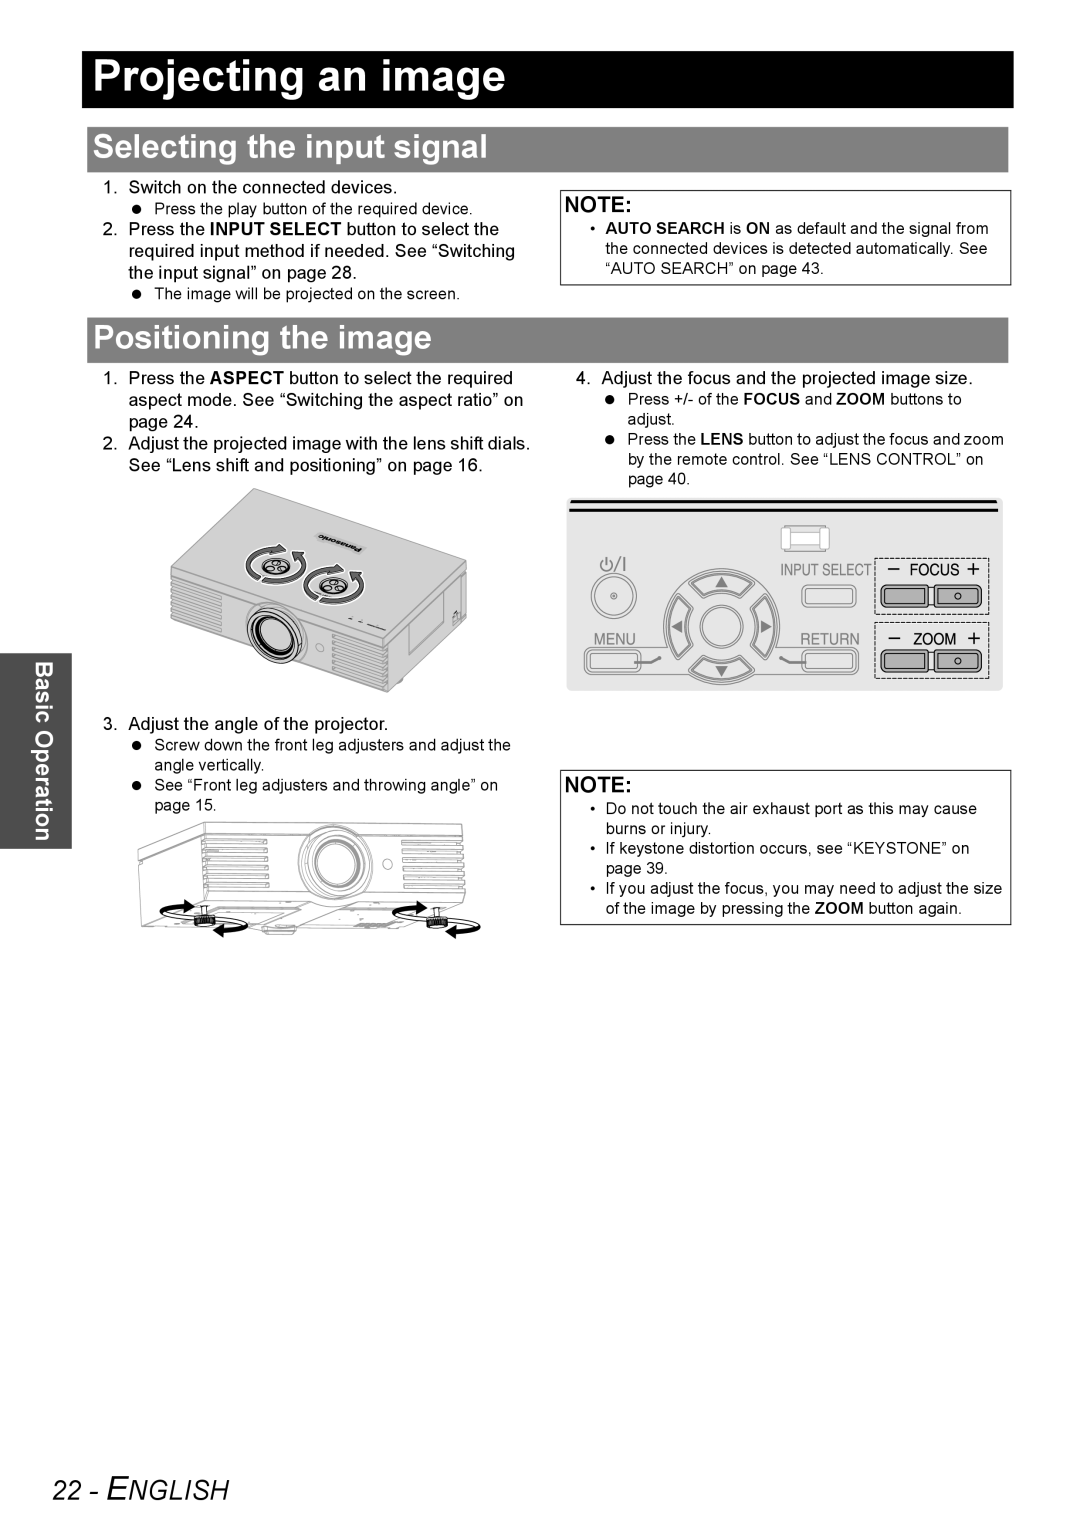 Panasonic PT-AE3000E Projecting an image, Selecting the input signal, Positioning the image, English, Basic Operation 